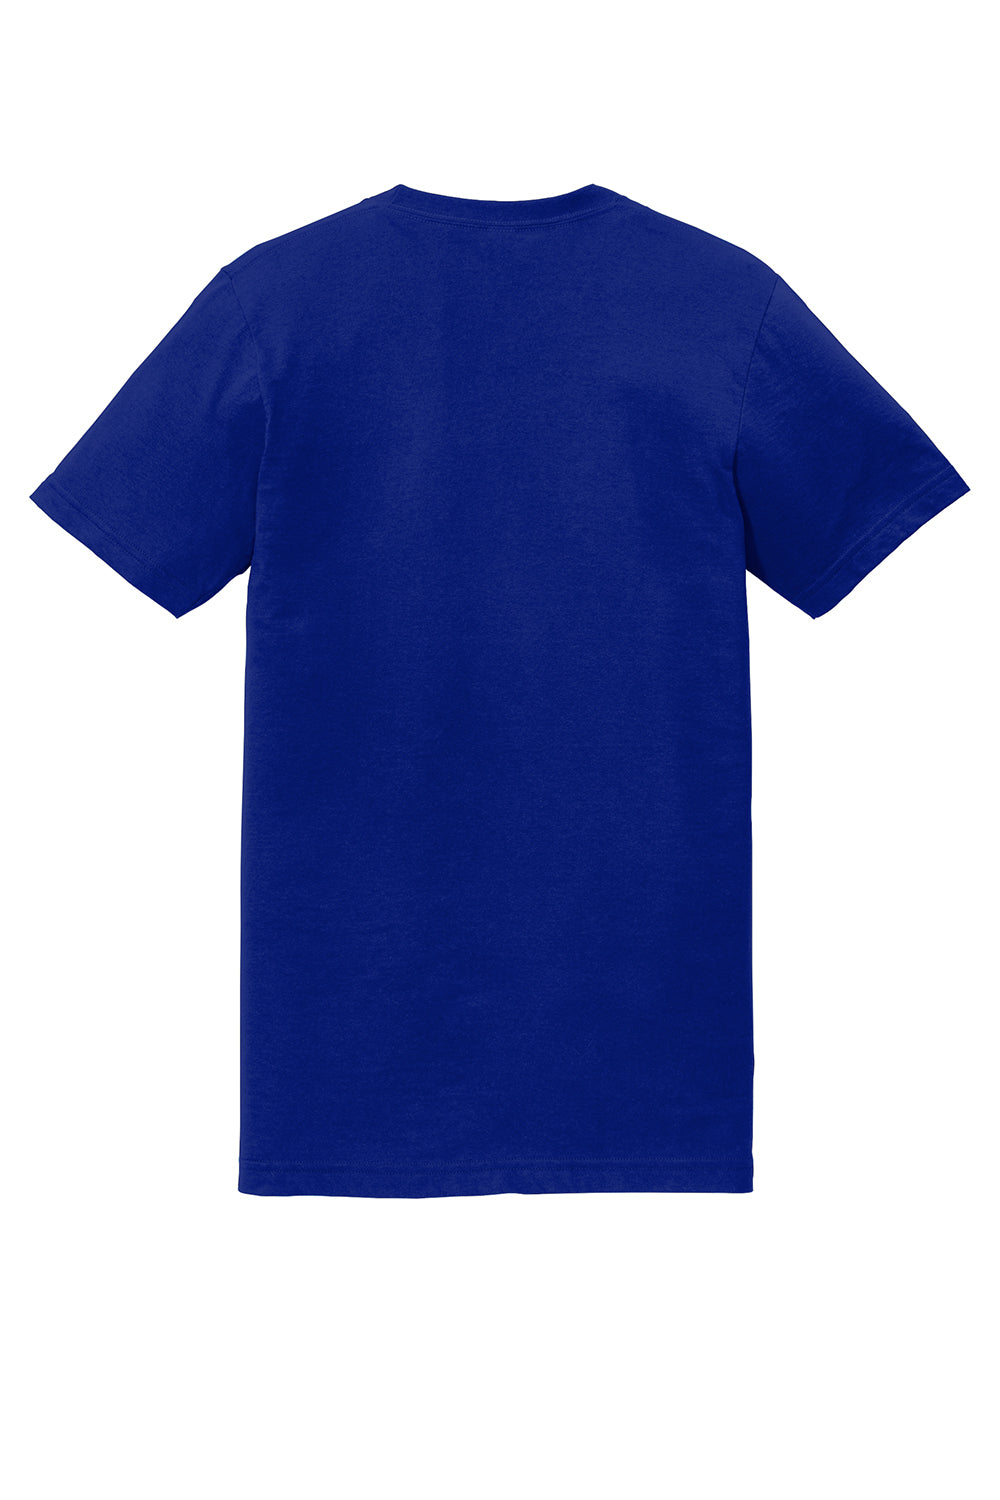 American Apparel 2001 Mens Fine Jersey Short Sleeve Crewneck T-Shirt Lapis Blue Flat Back